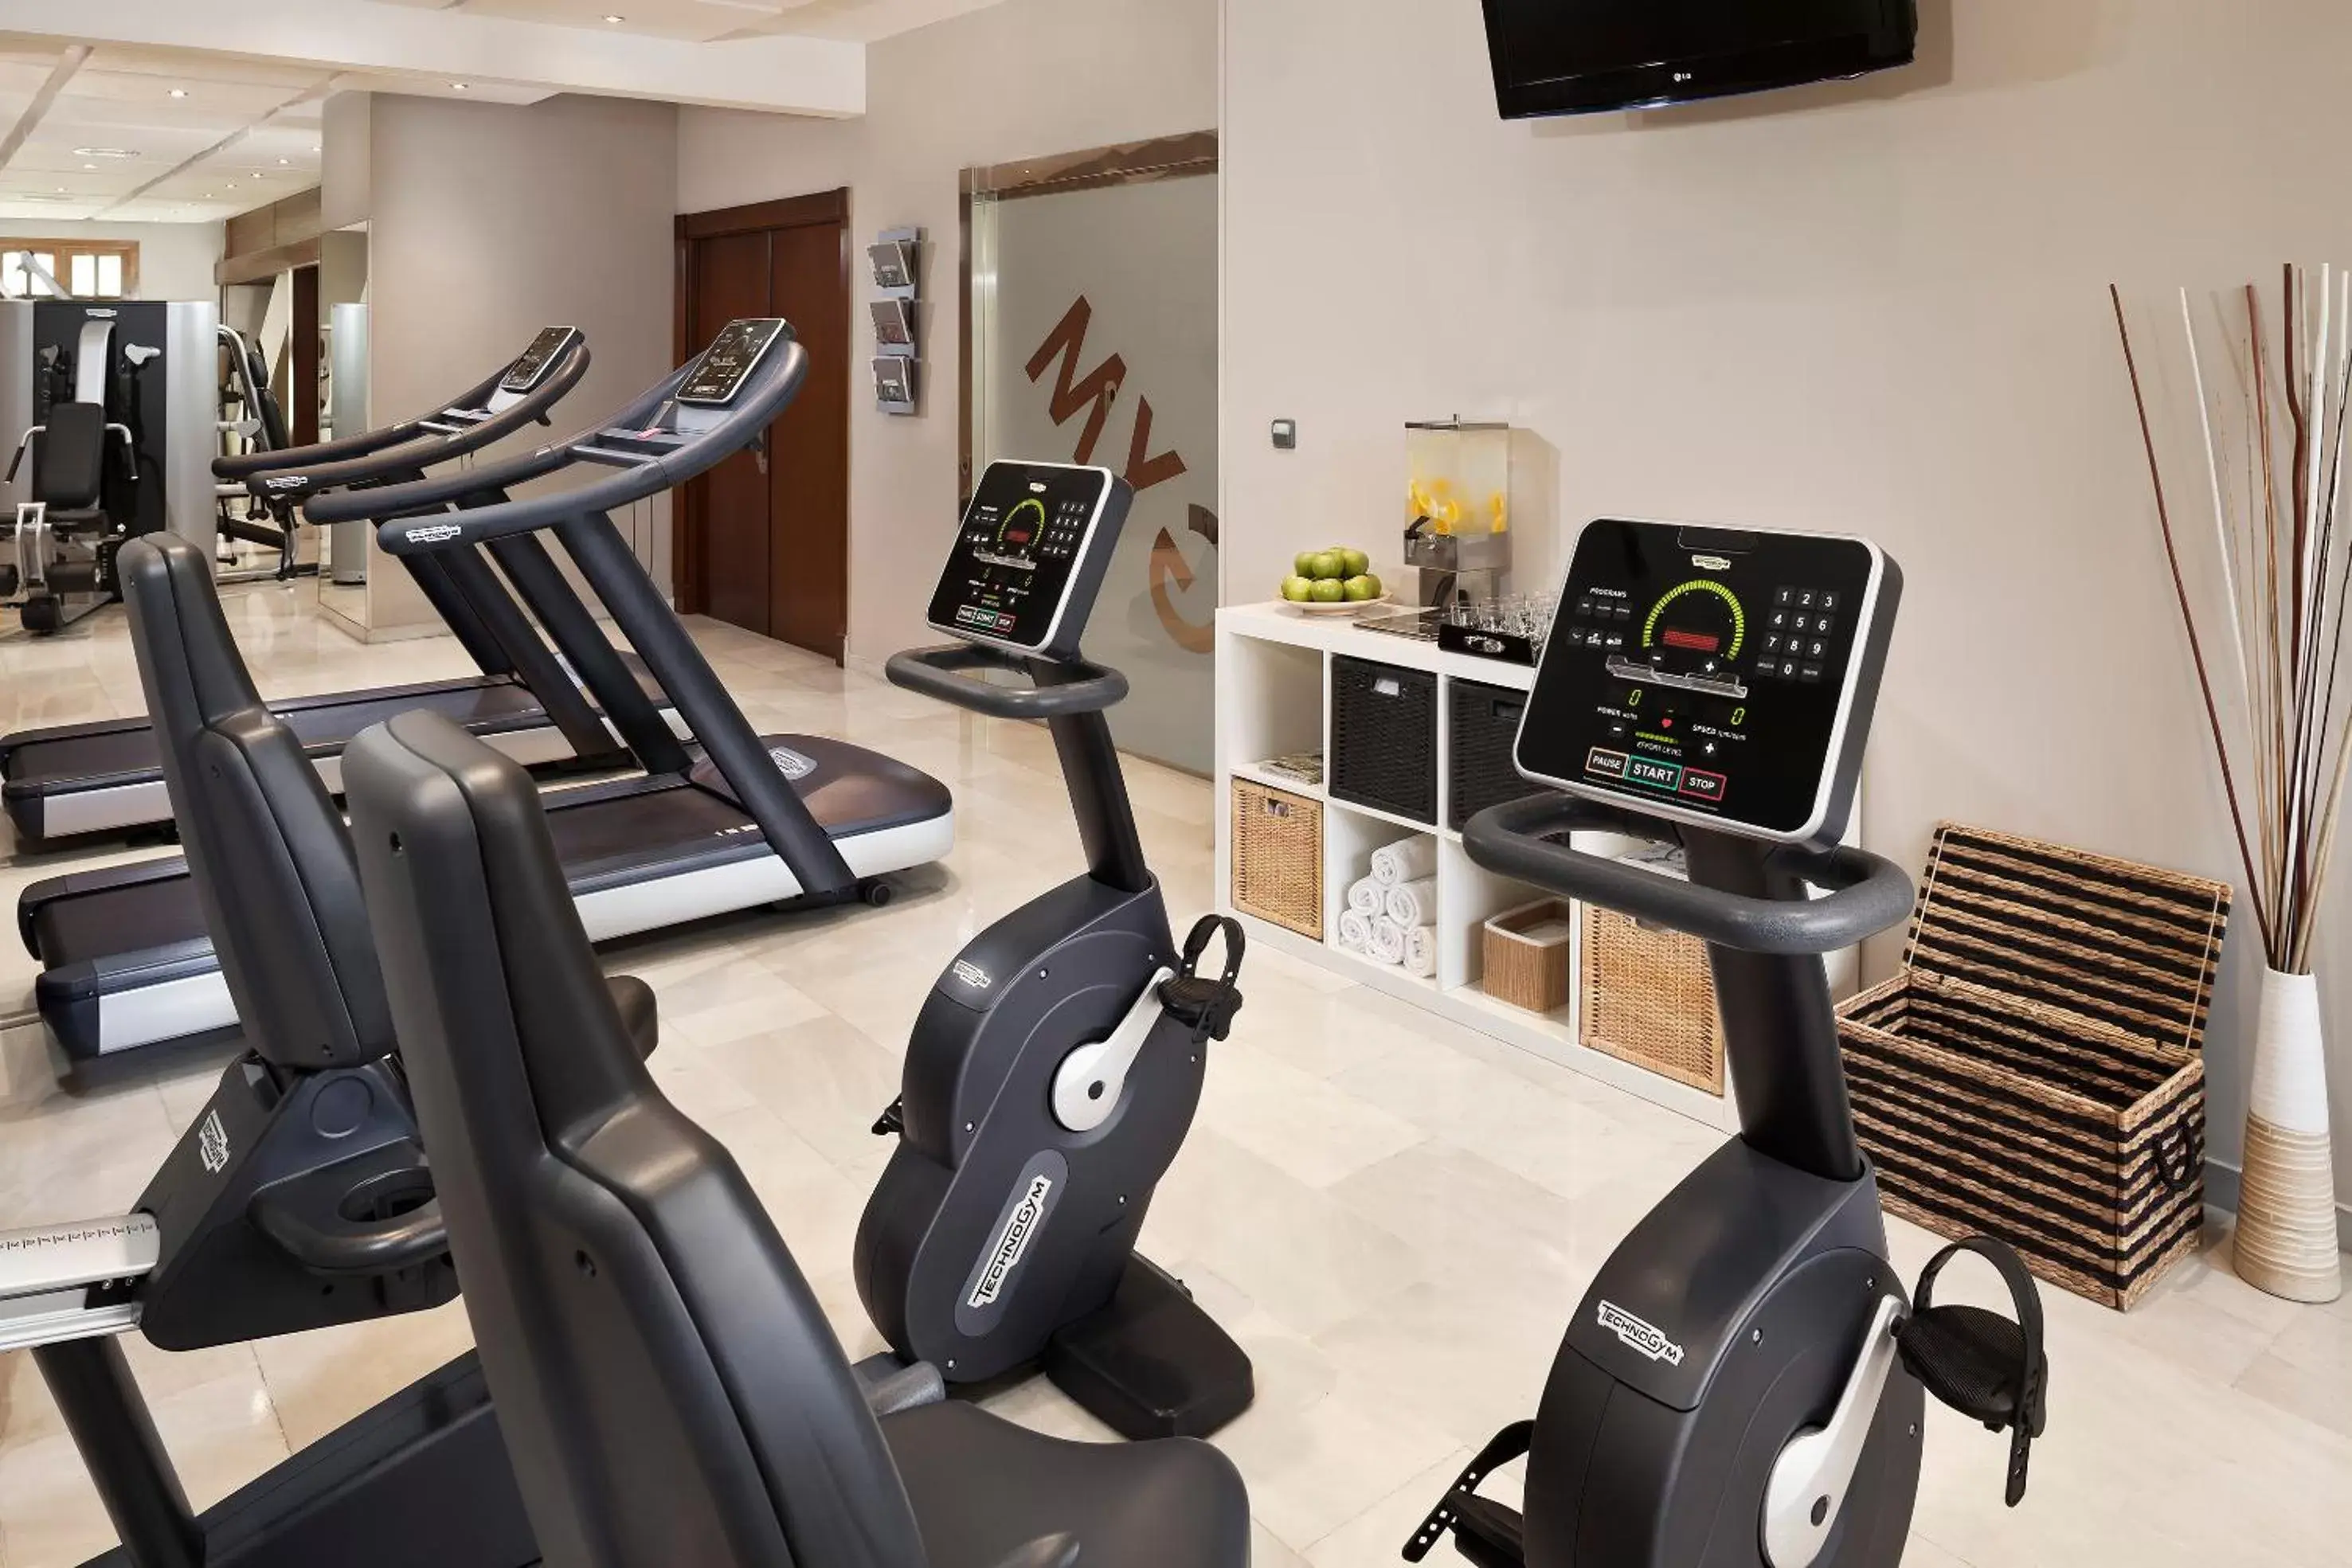 Fitness centre/facilities, Fitness Center/Facilities in Melia Lebreros